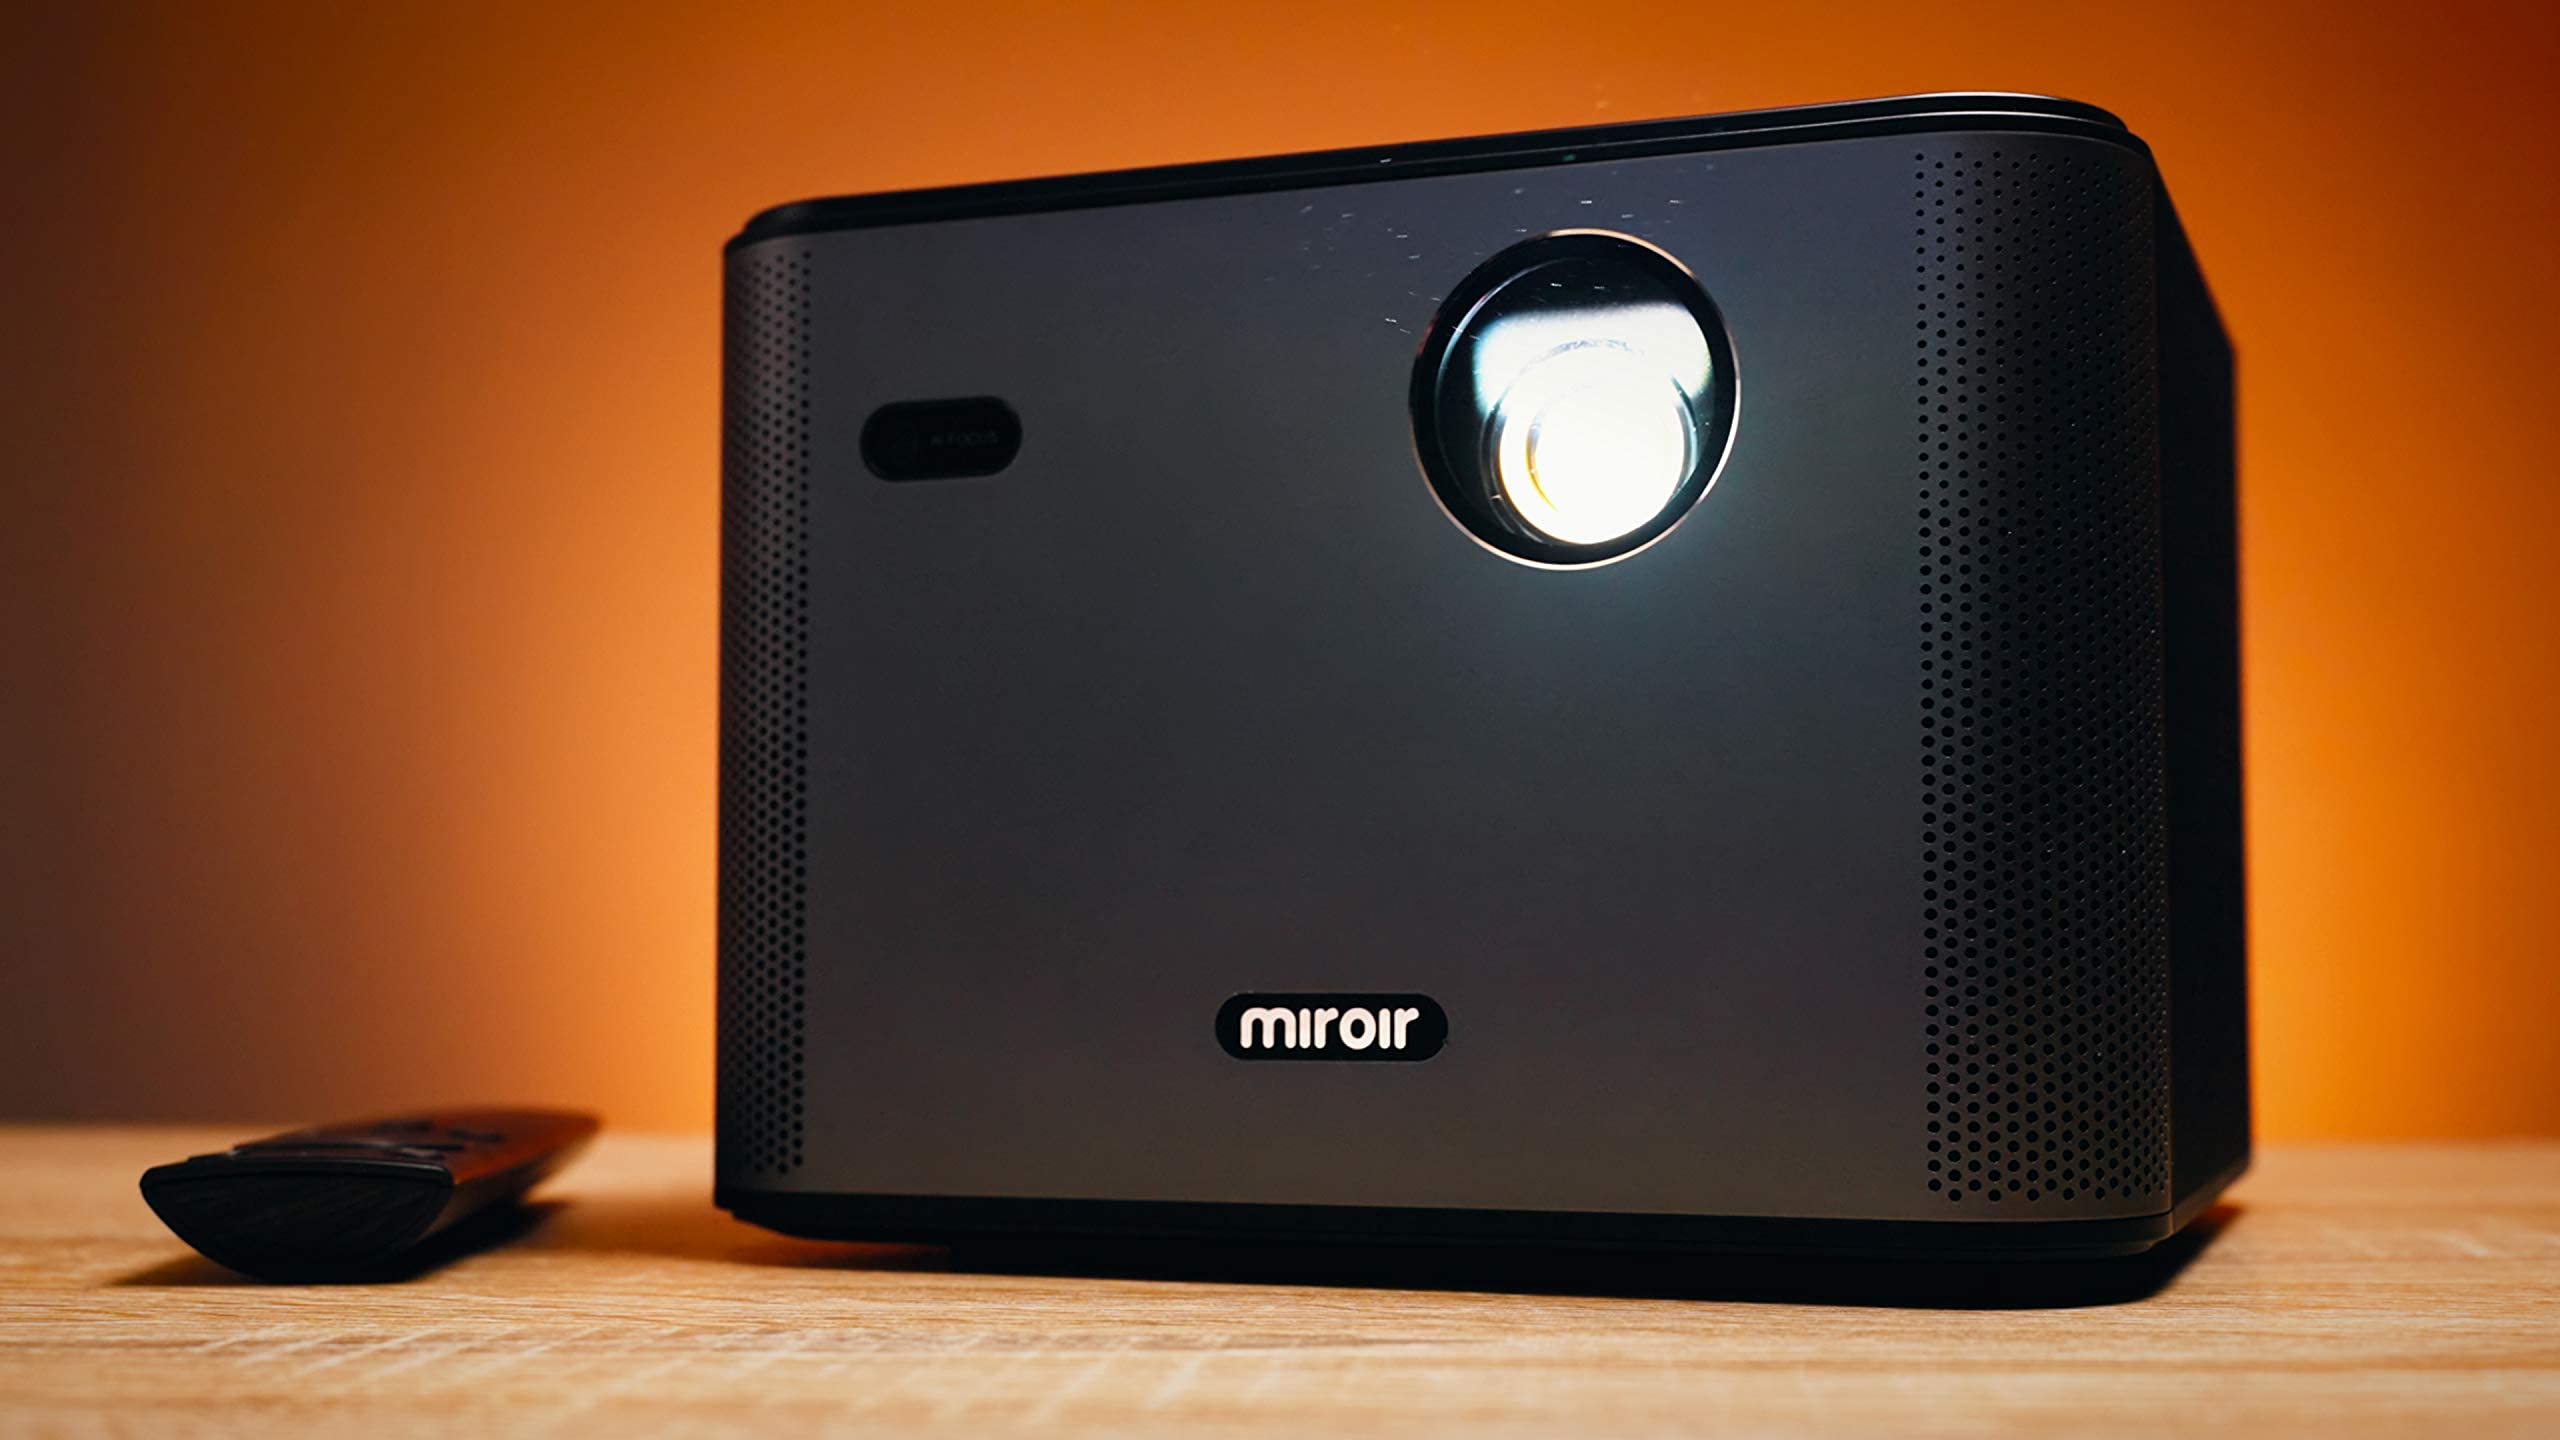 Miroir M1200S 1080p Smart Projector, 5G WIFI and Bluetooth,4K Input, 1000 LED Lumens